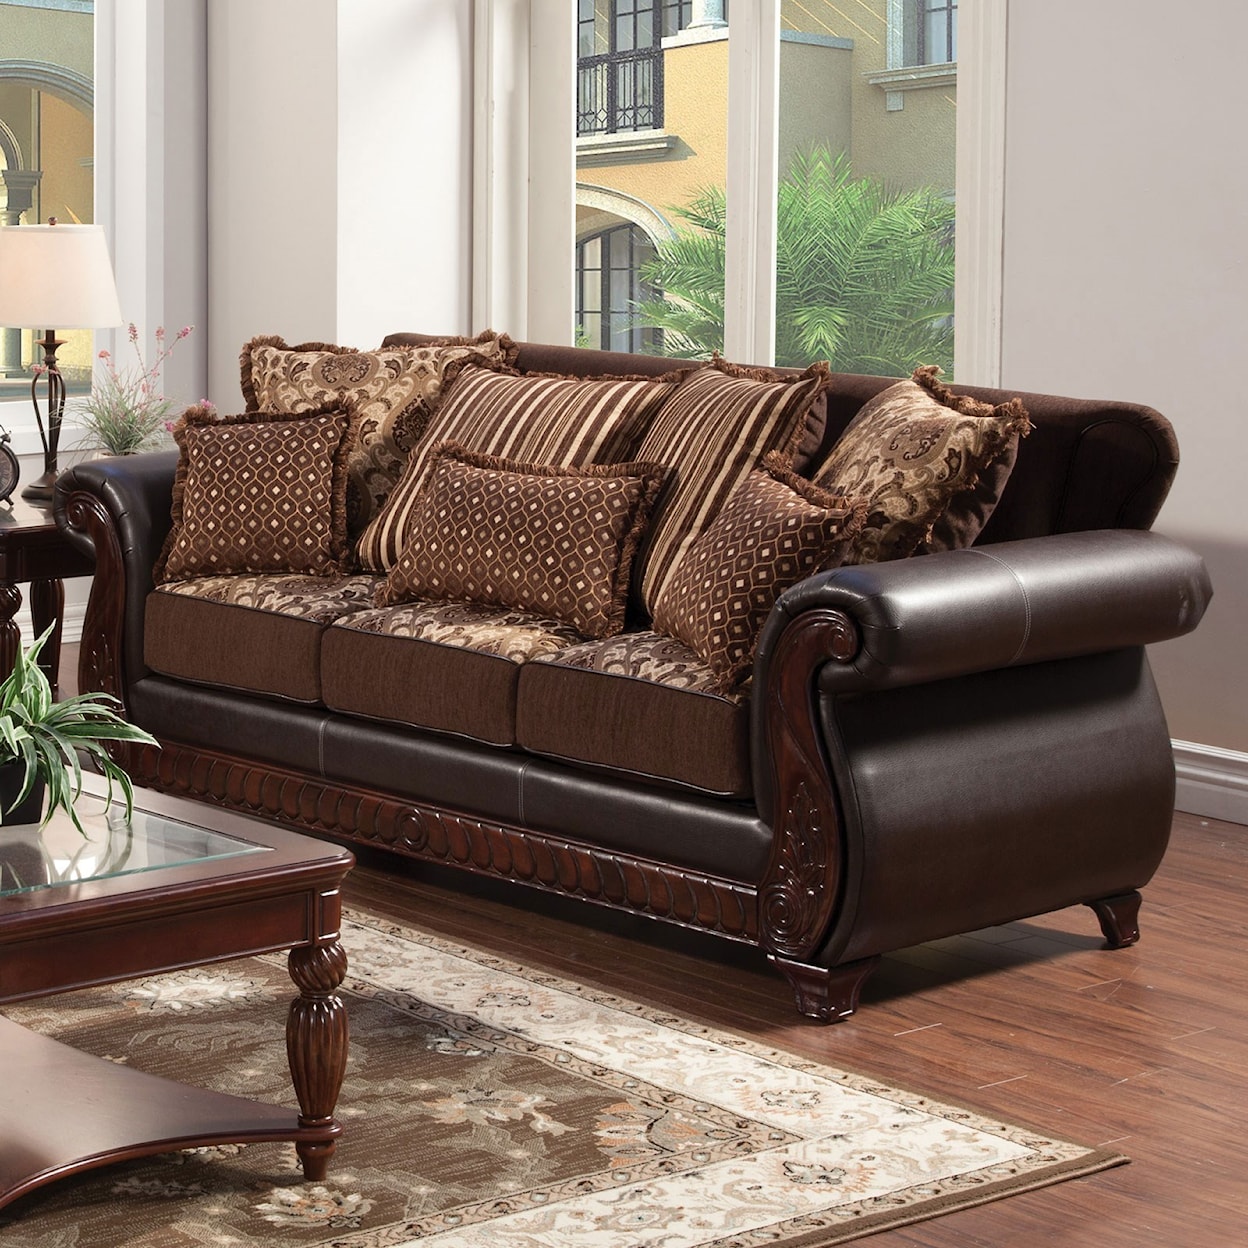 Furniture of America - FOA Franklin Sofa